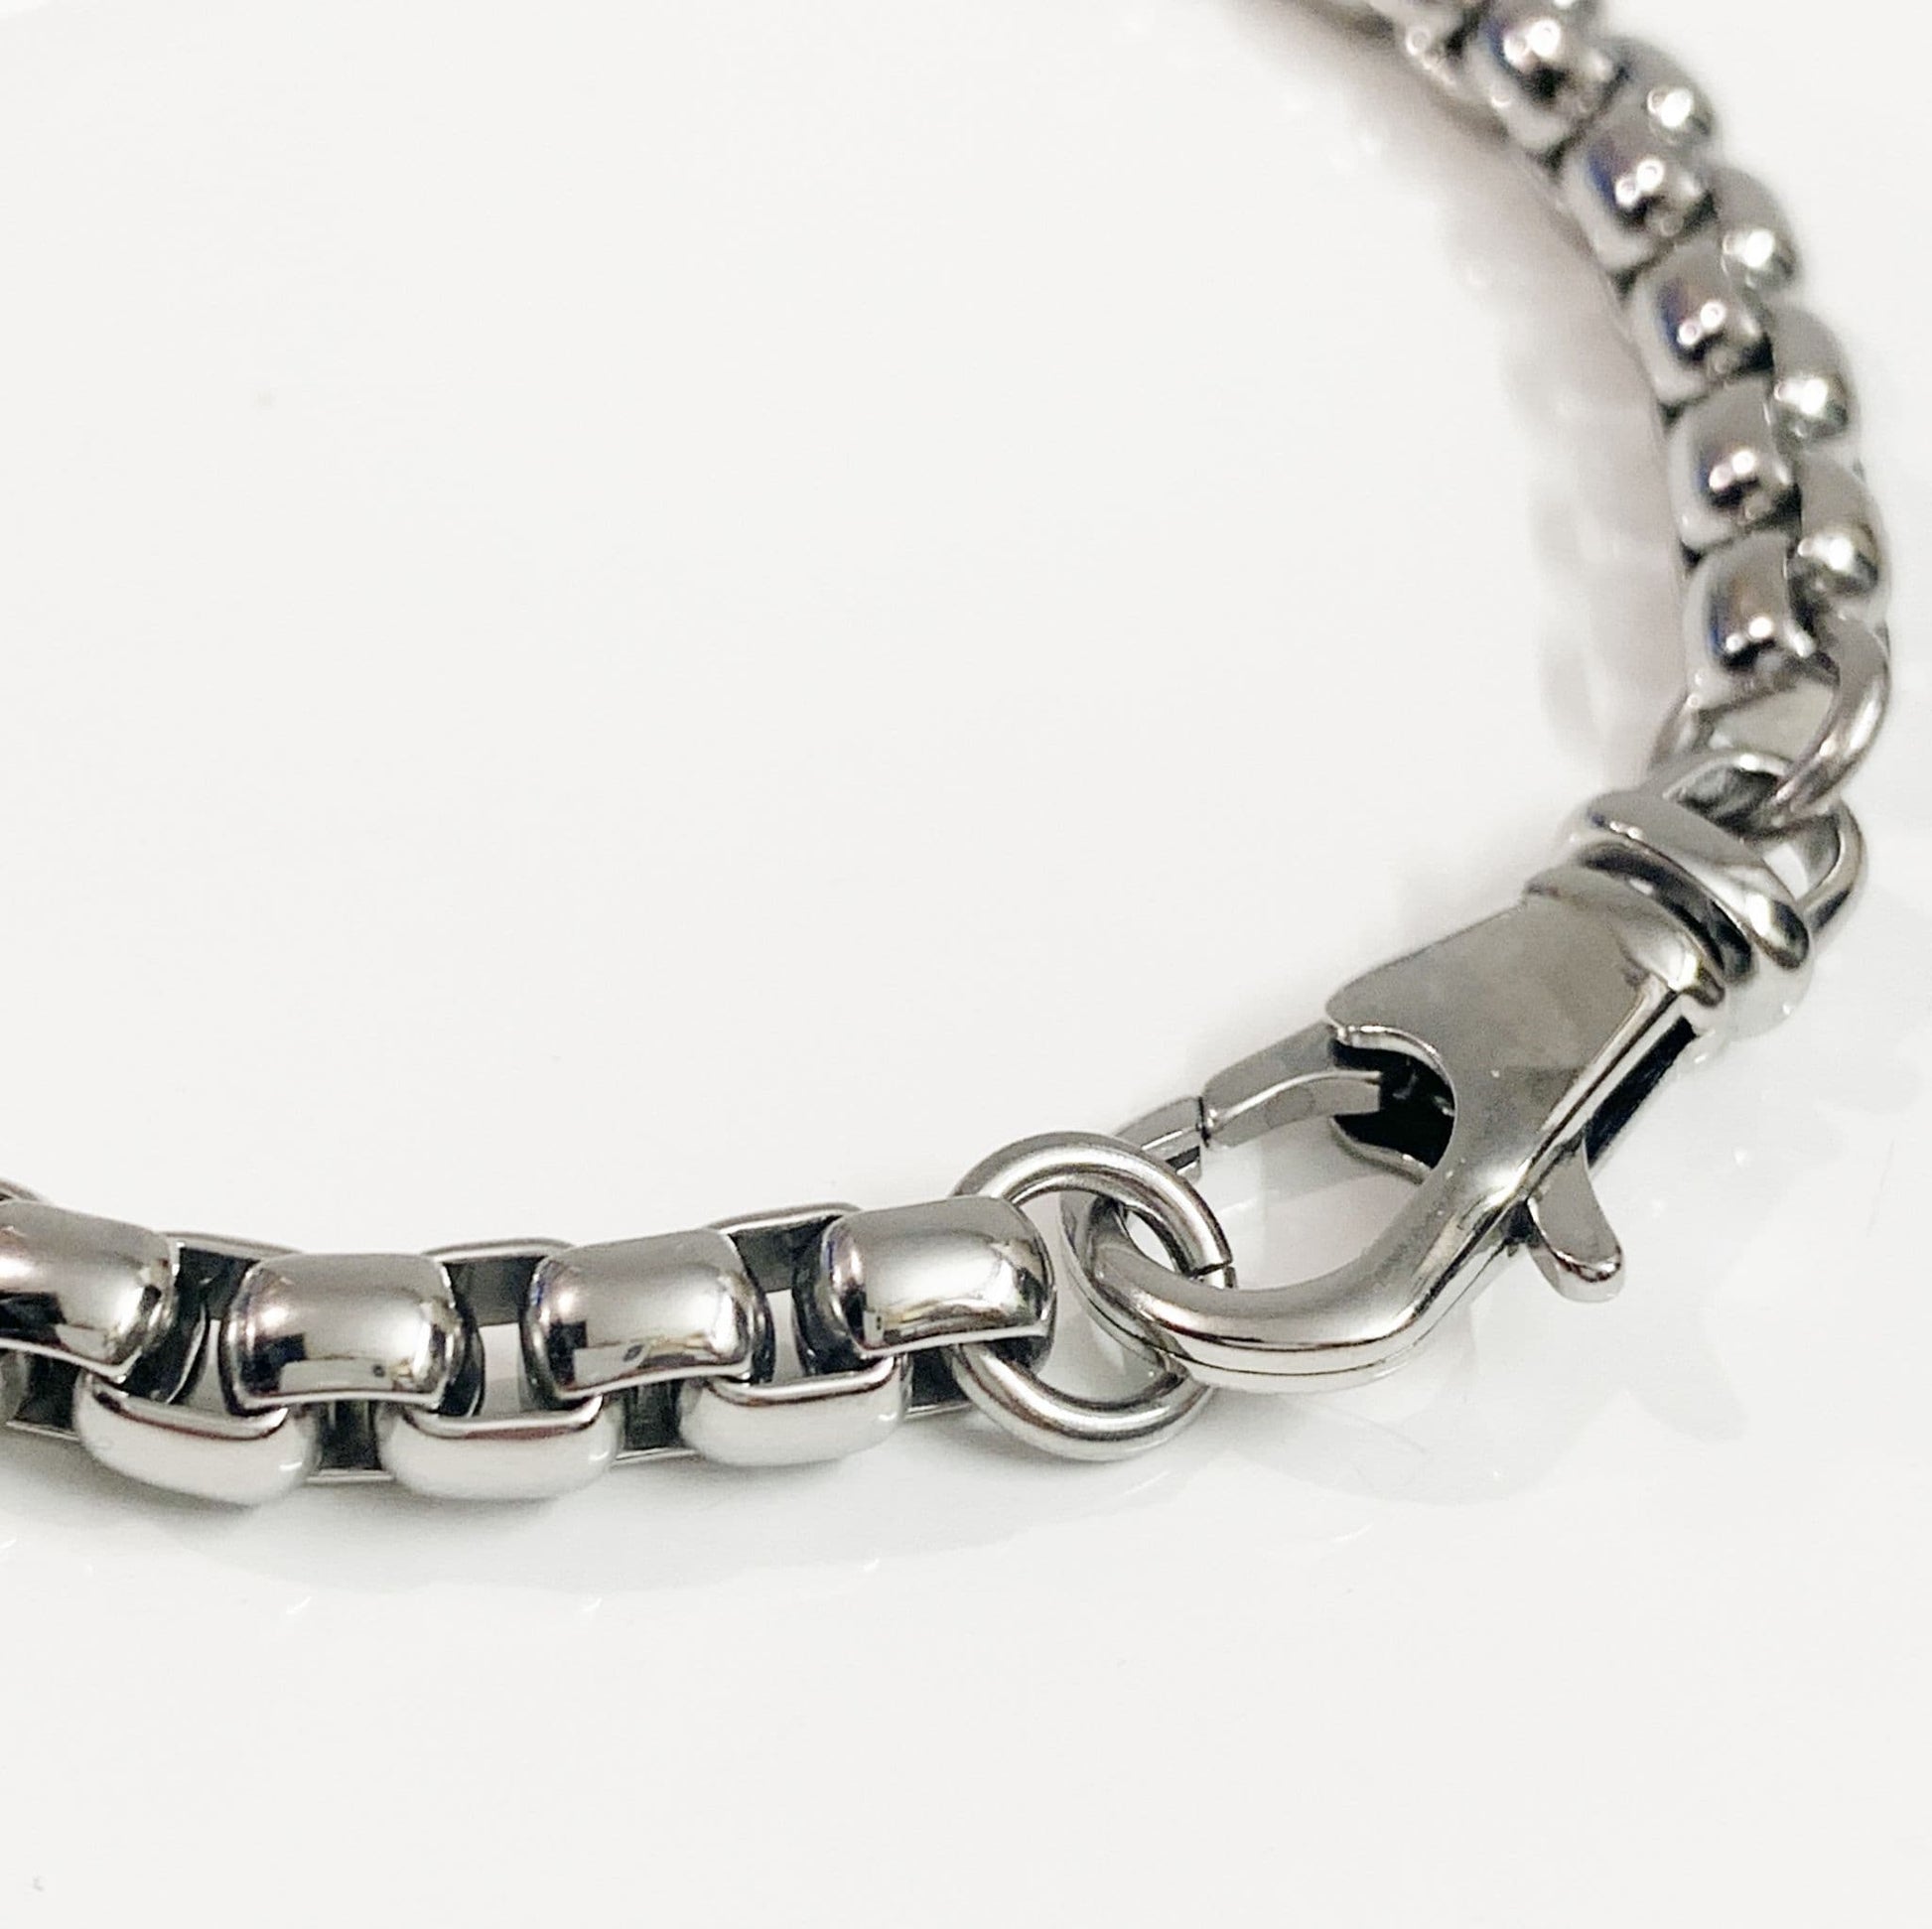 Men's oval belcher chain link solid 27g stainless steel heavyweight 9 inch bracelet